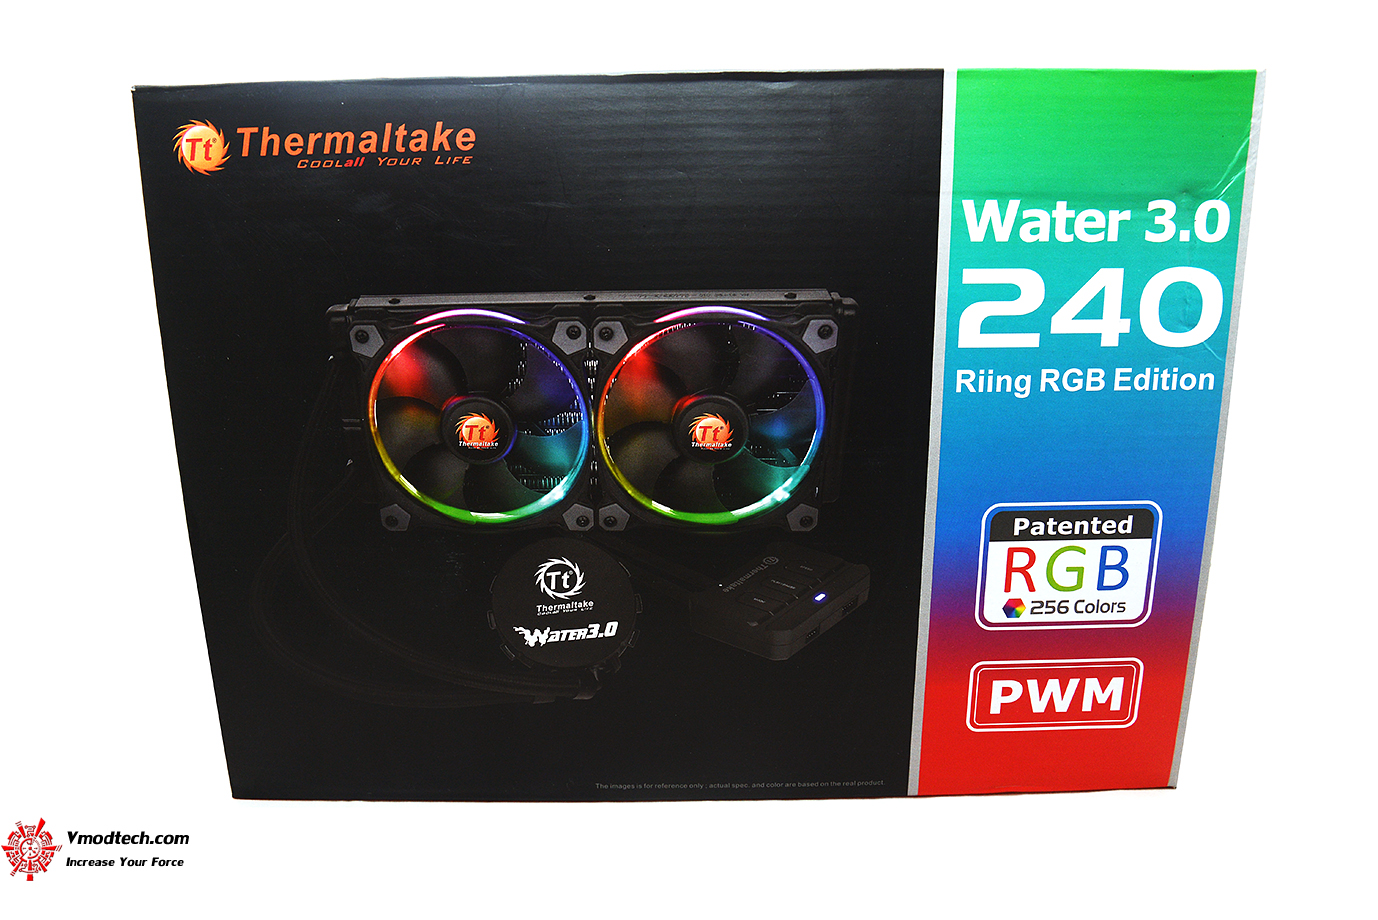 dsc 0370 Thermaltake Water 3.0 Riing RGB 240 Review